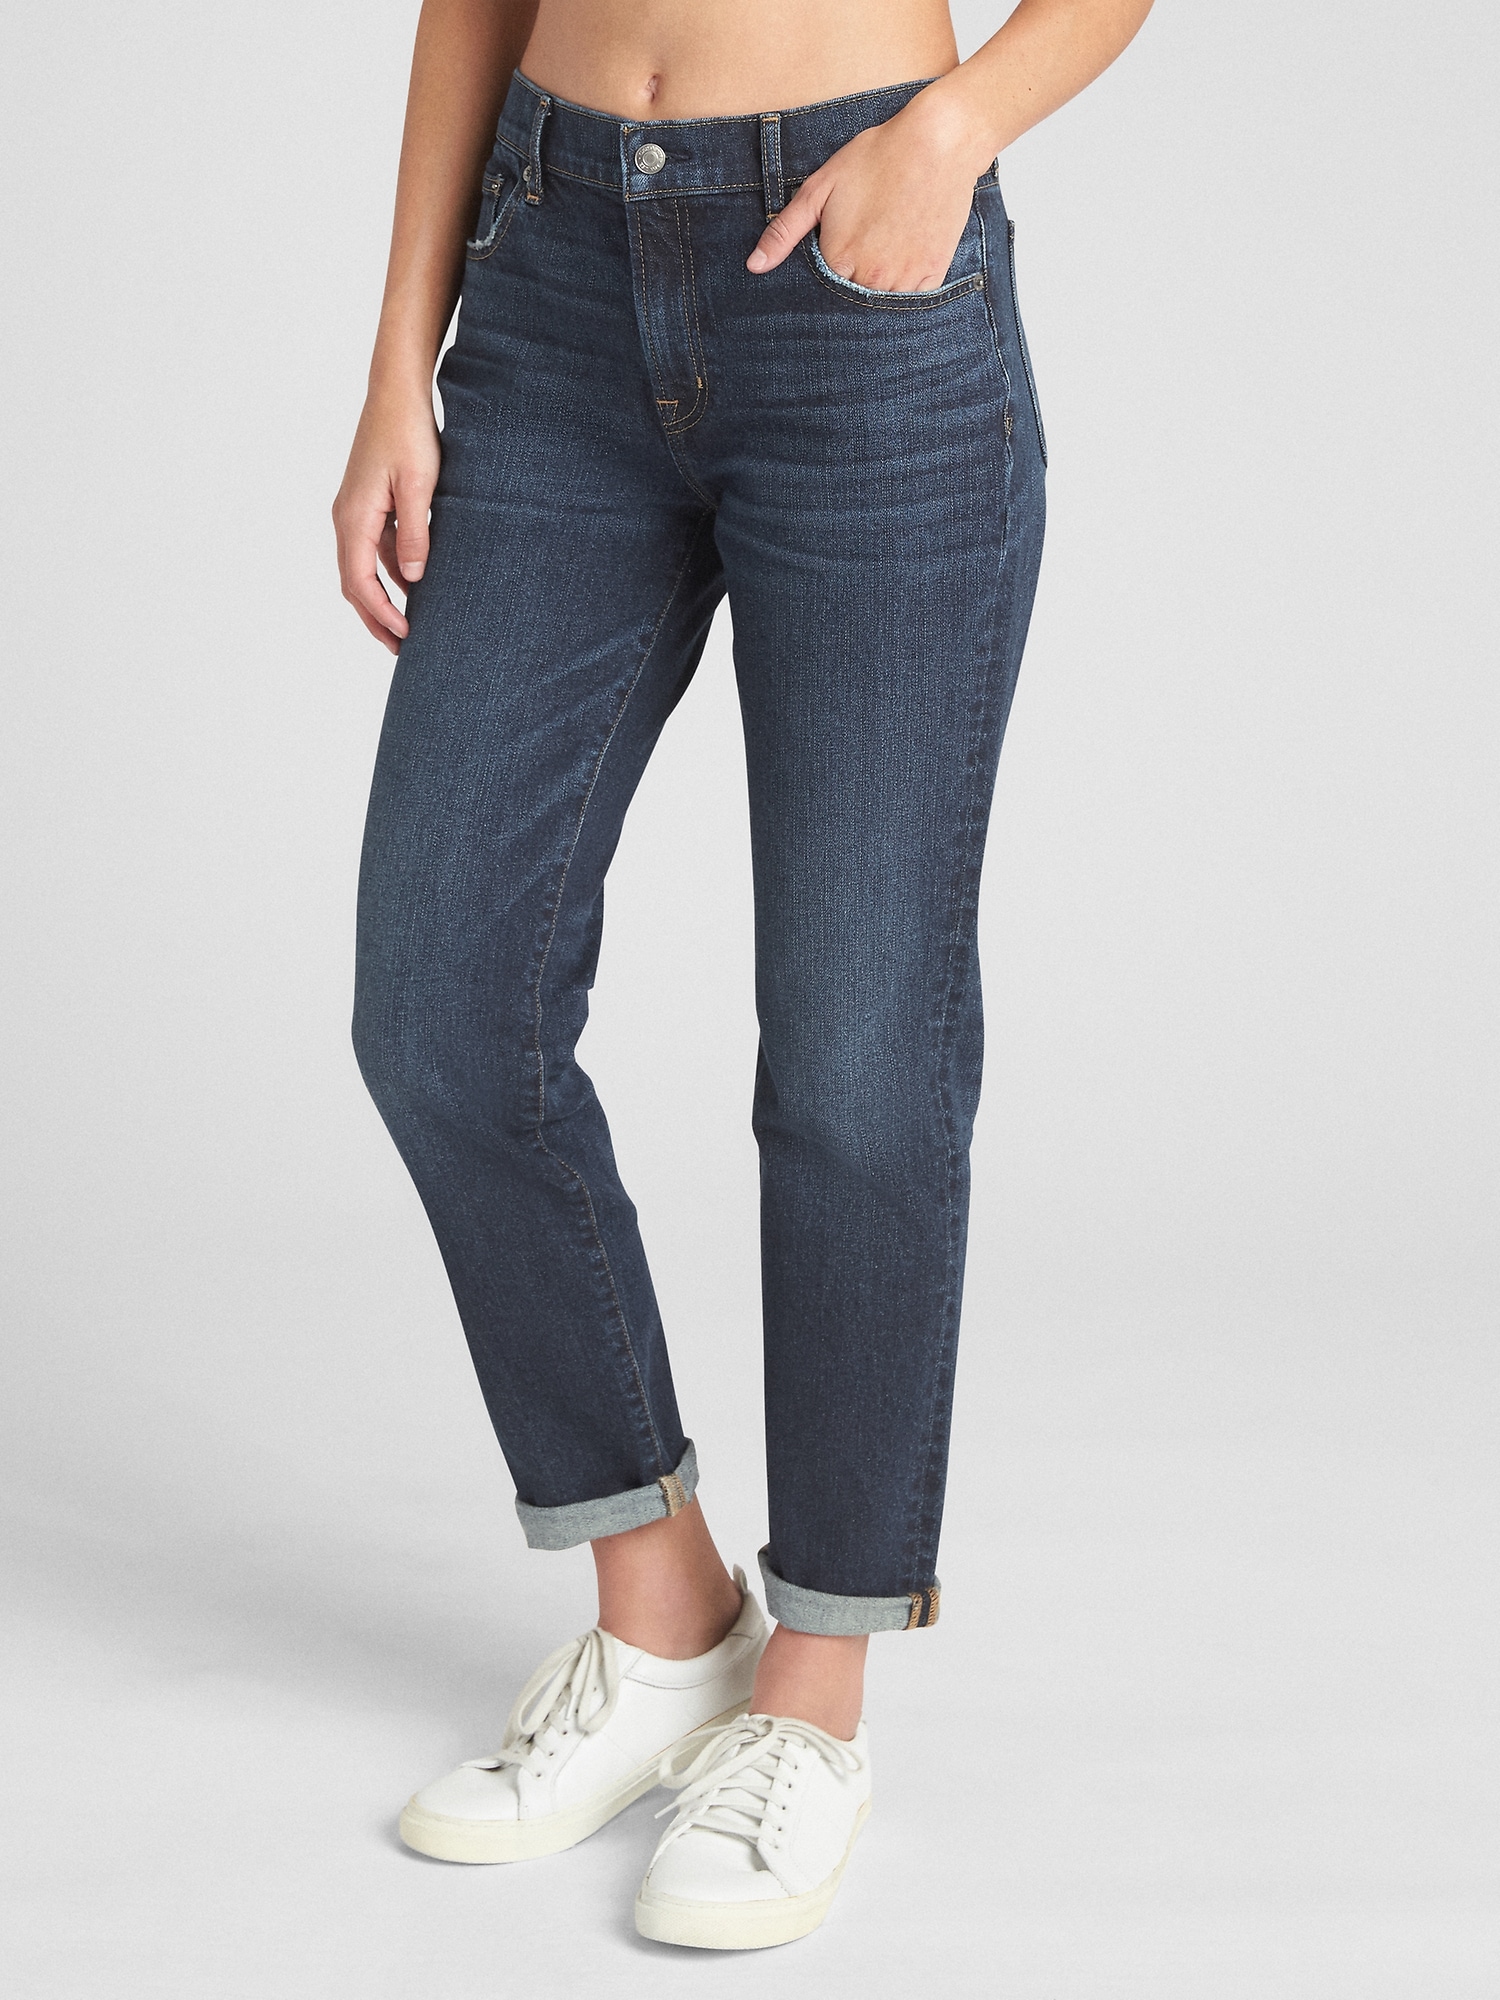 tall girlfriend jeans